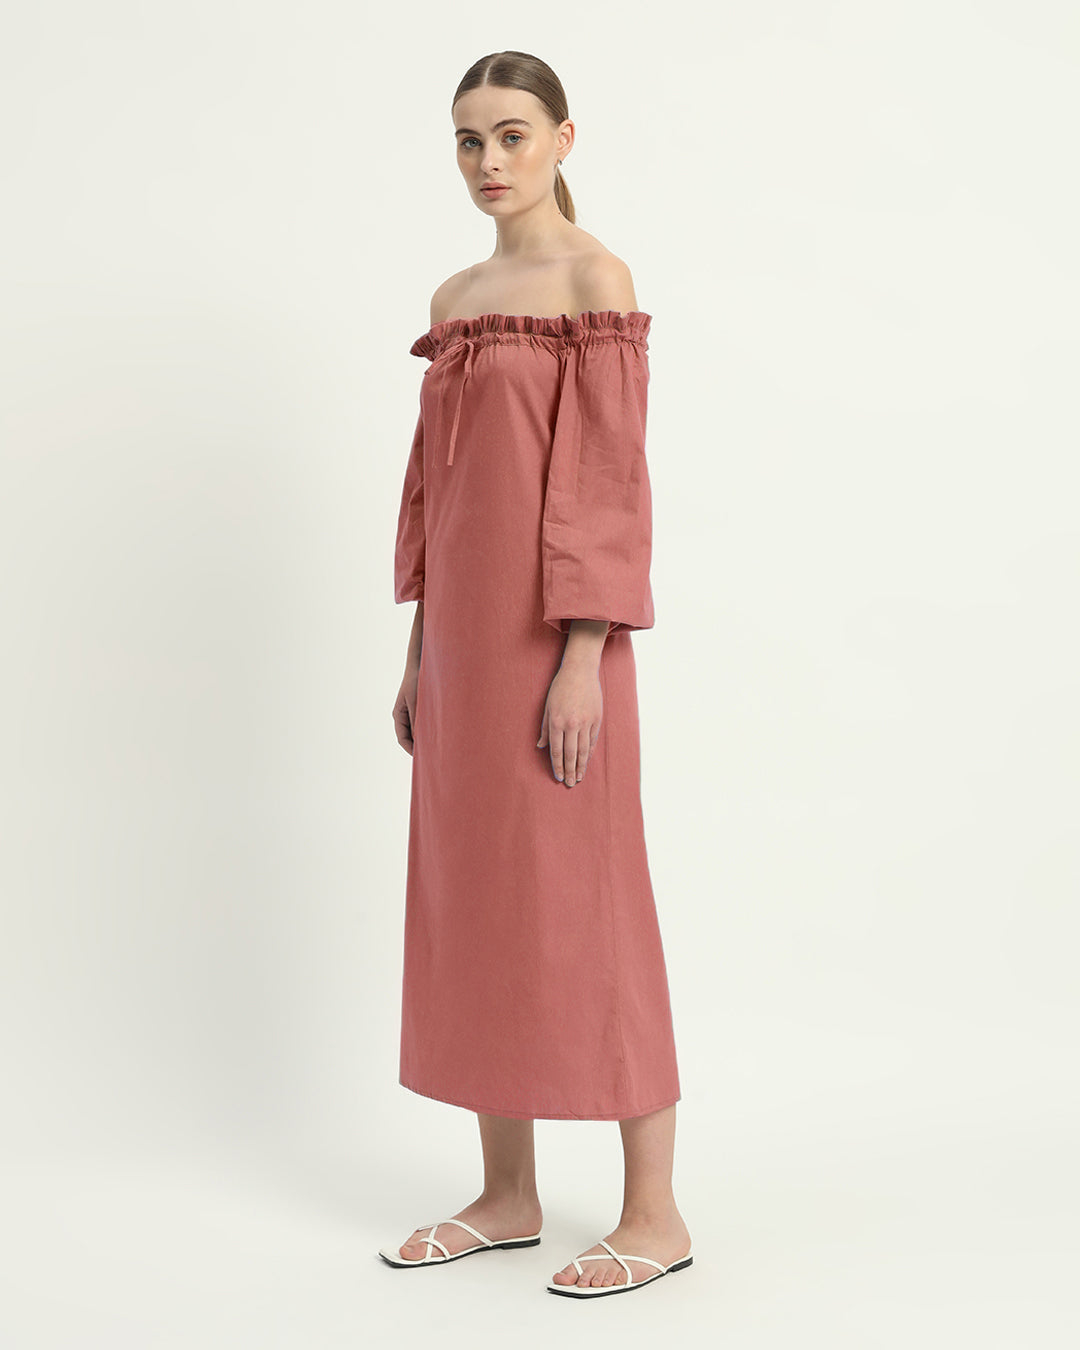 The Ivory Pink Carlisle Cotton Dress